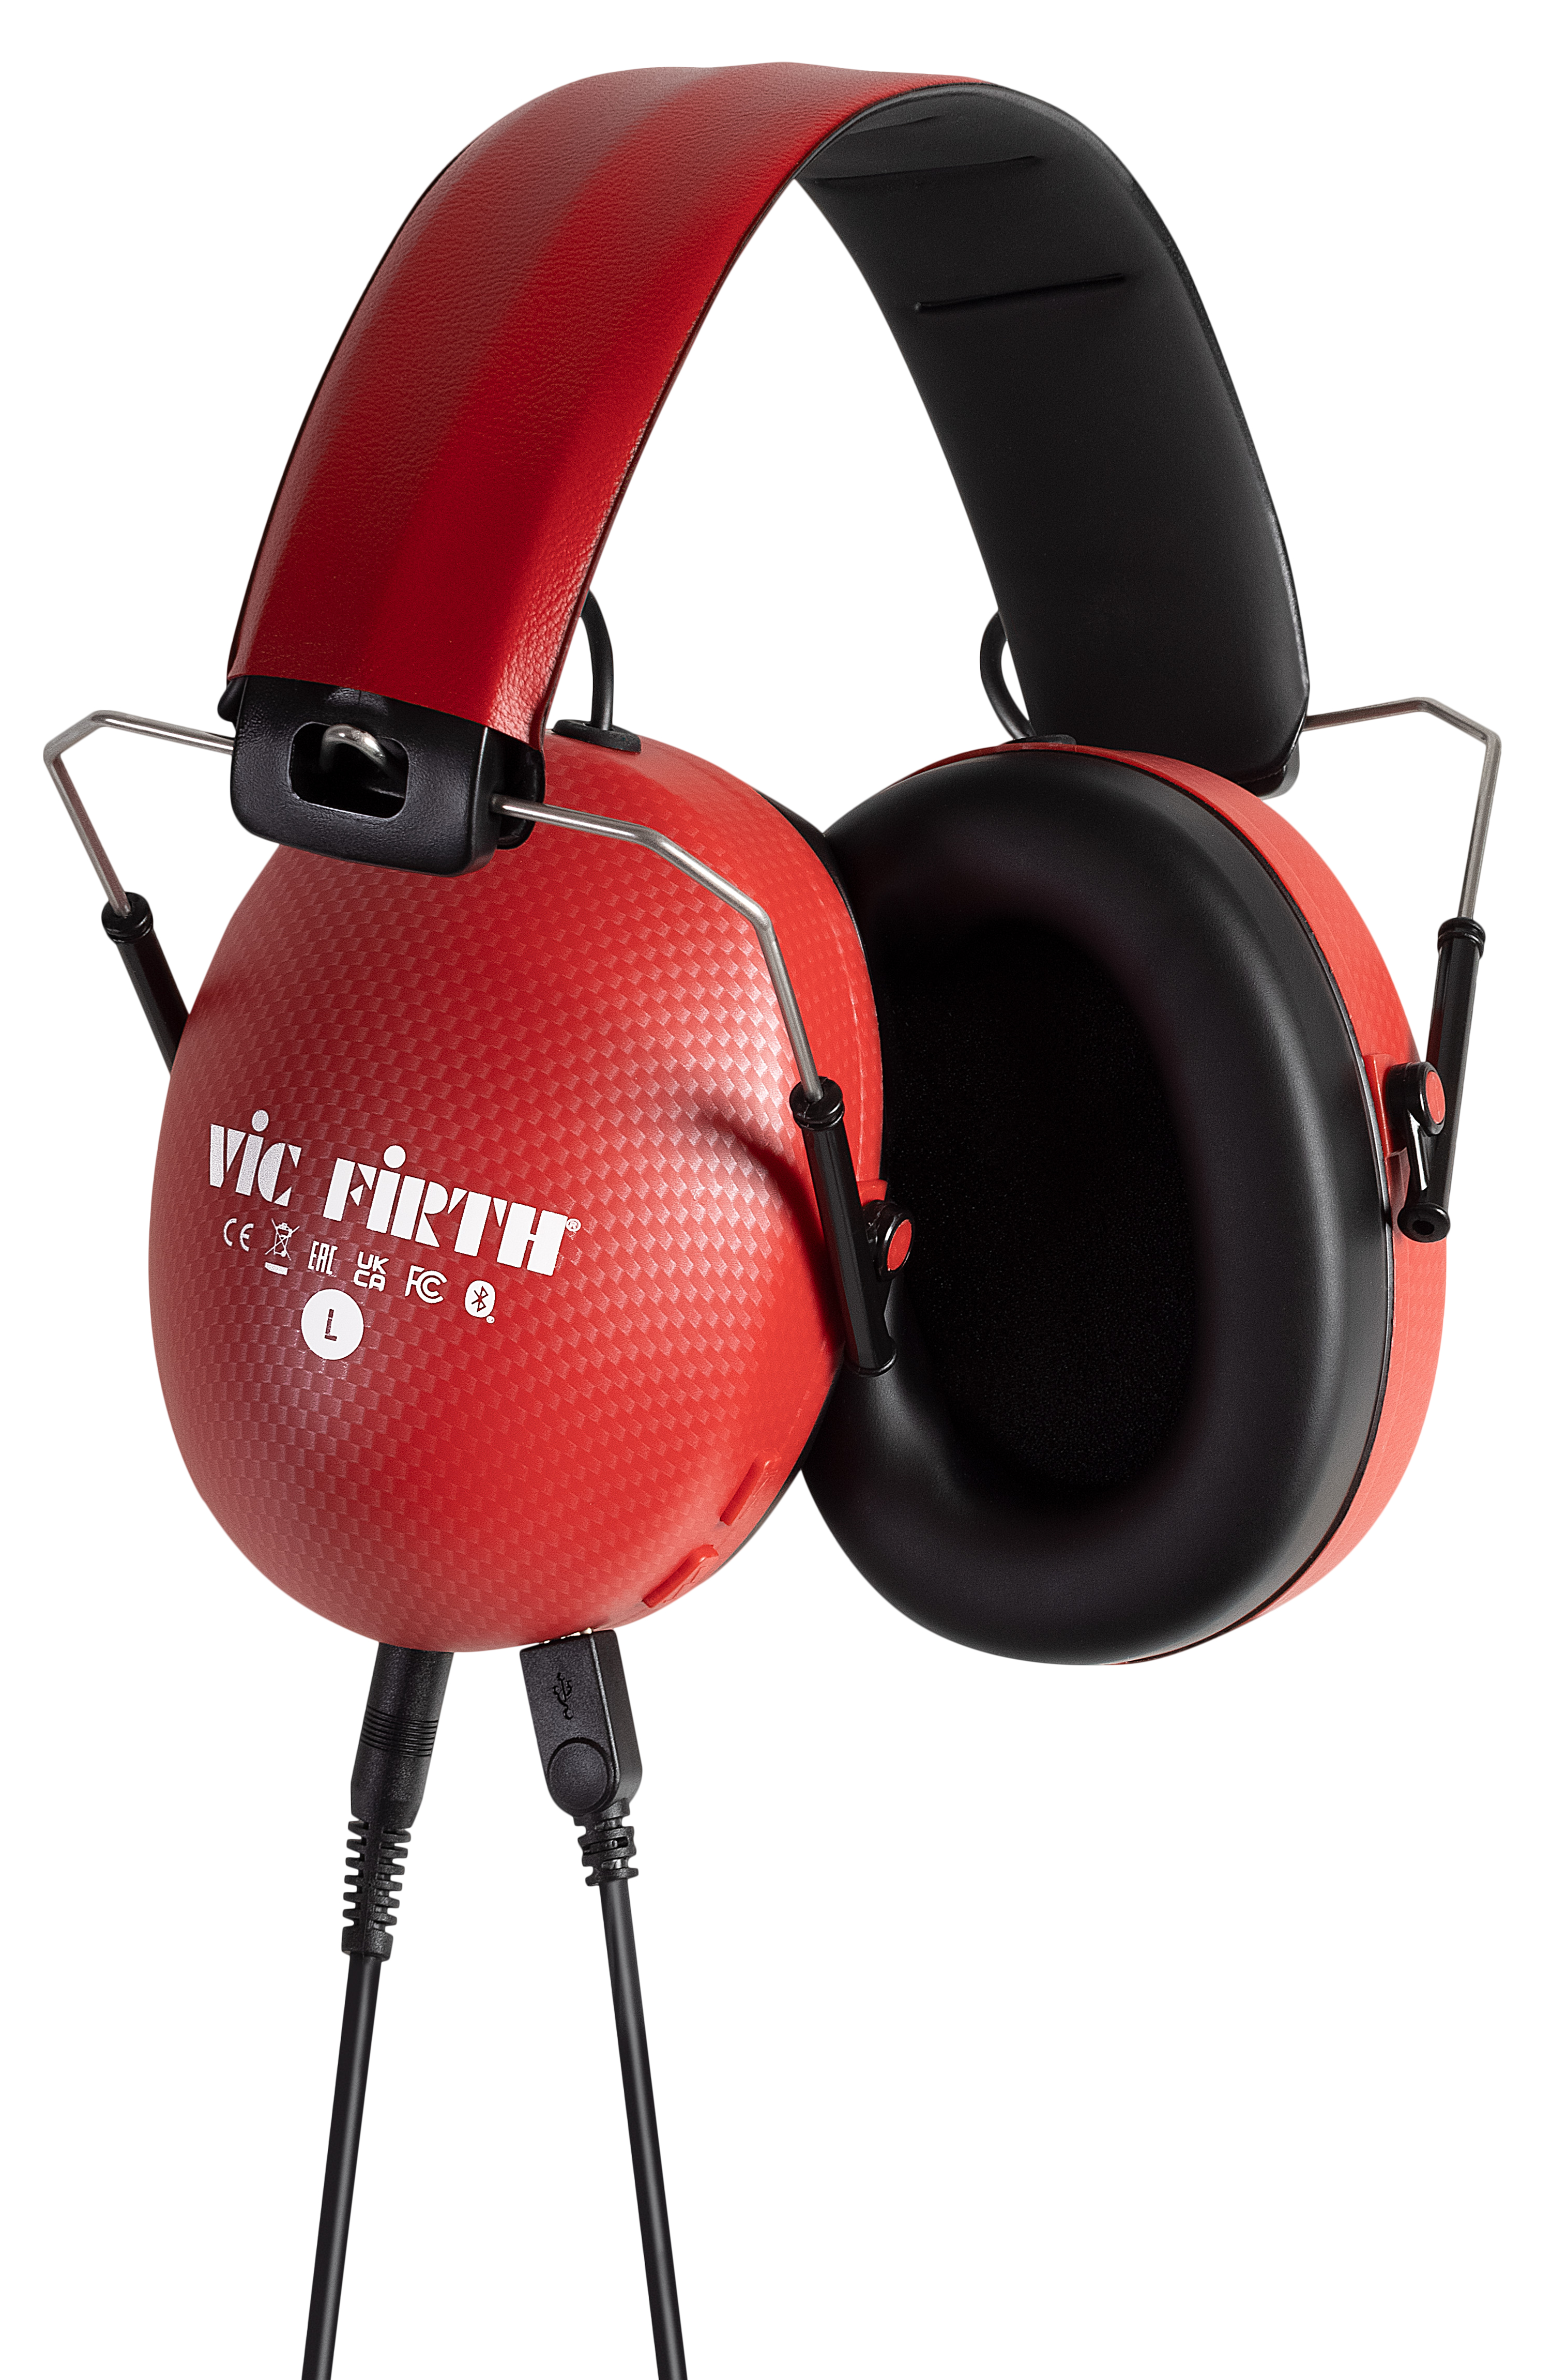 Vic Firth Bluetooth Isolation Kopfhörer